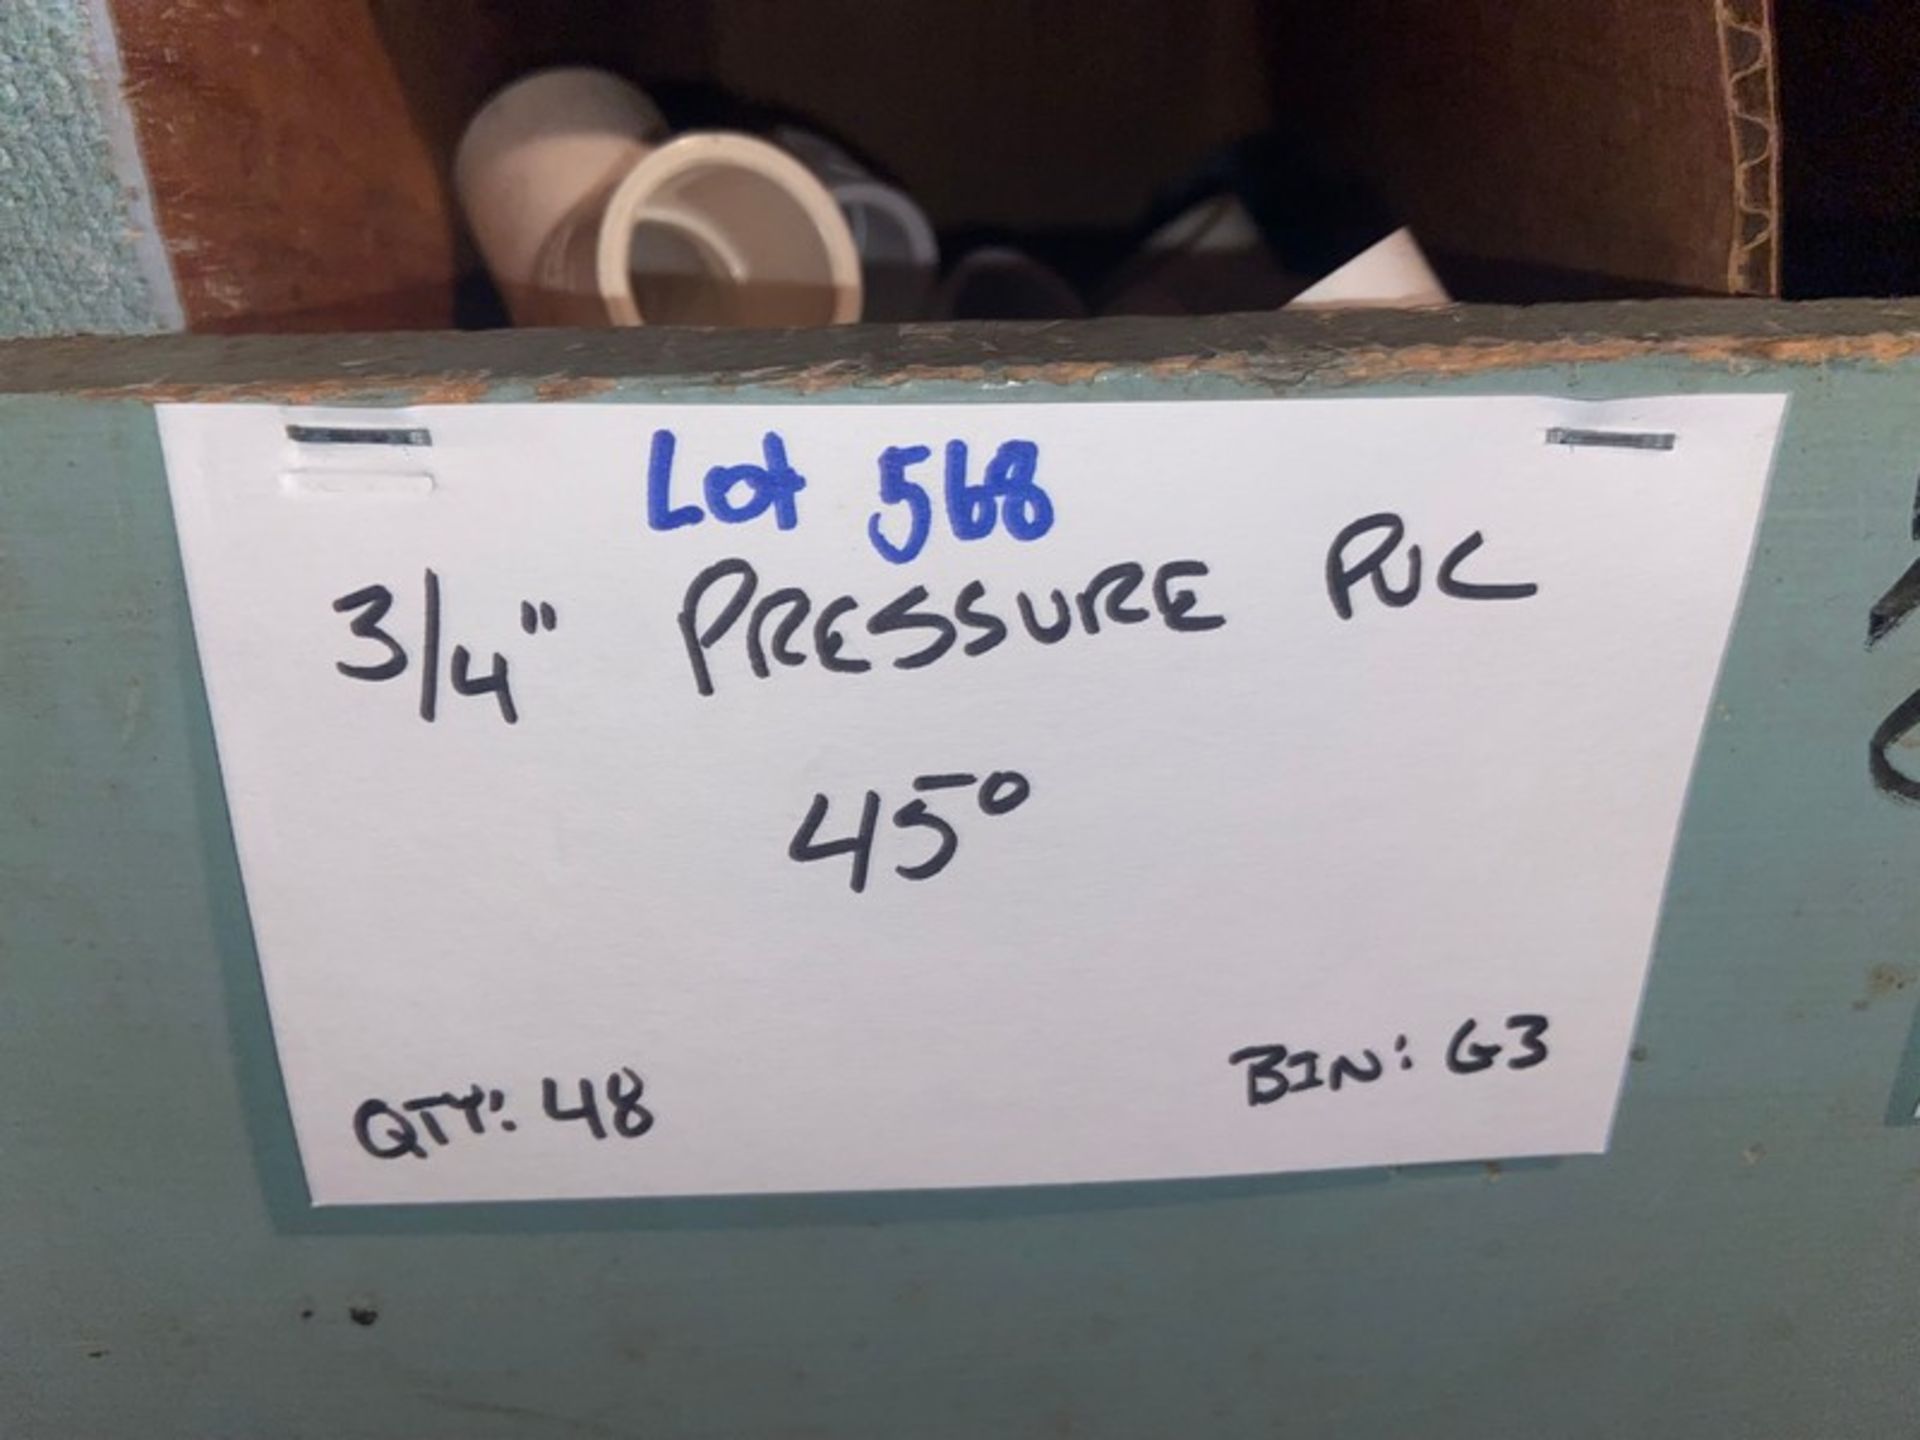 (15) 3/4” Pressure PVC Stree5 (Bin:G3), Includes (48) 3/4” Pressure PVC 45’ (Bin:G3) (LOCATED IN - Image 8 of 8